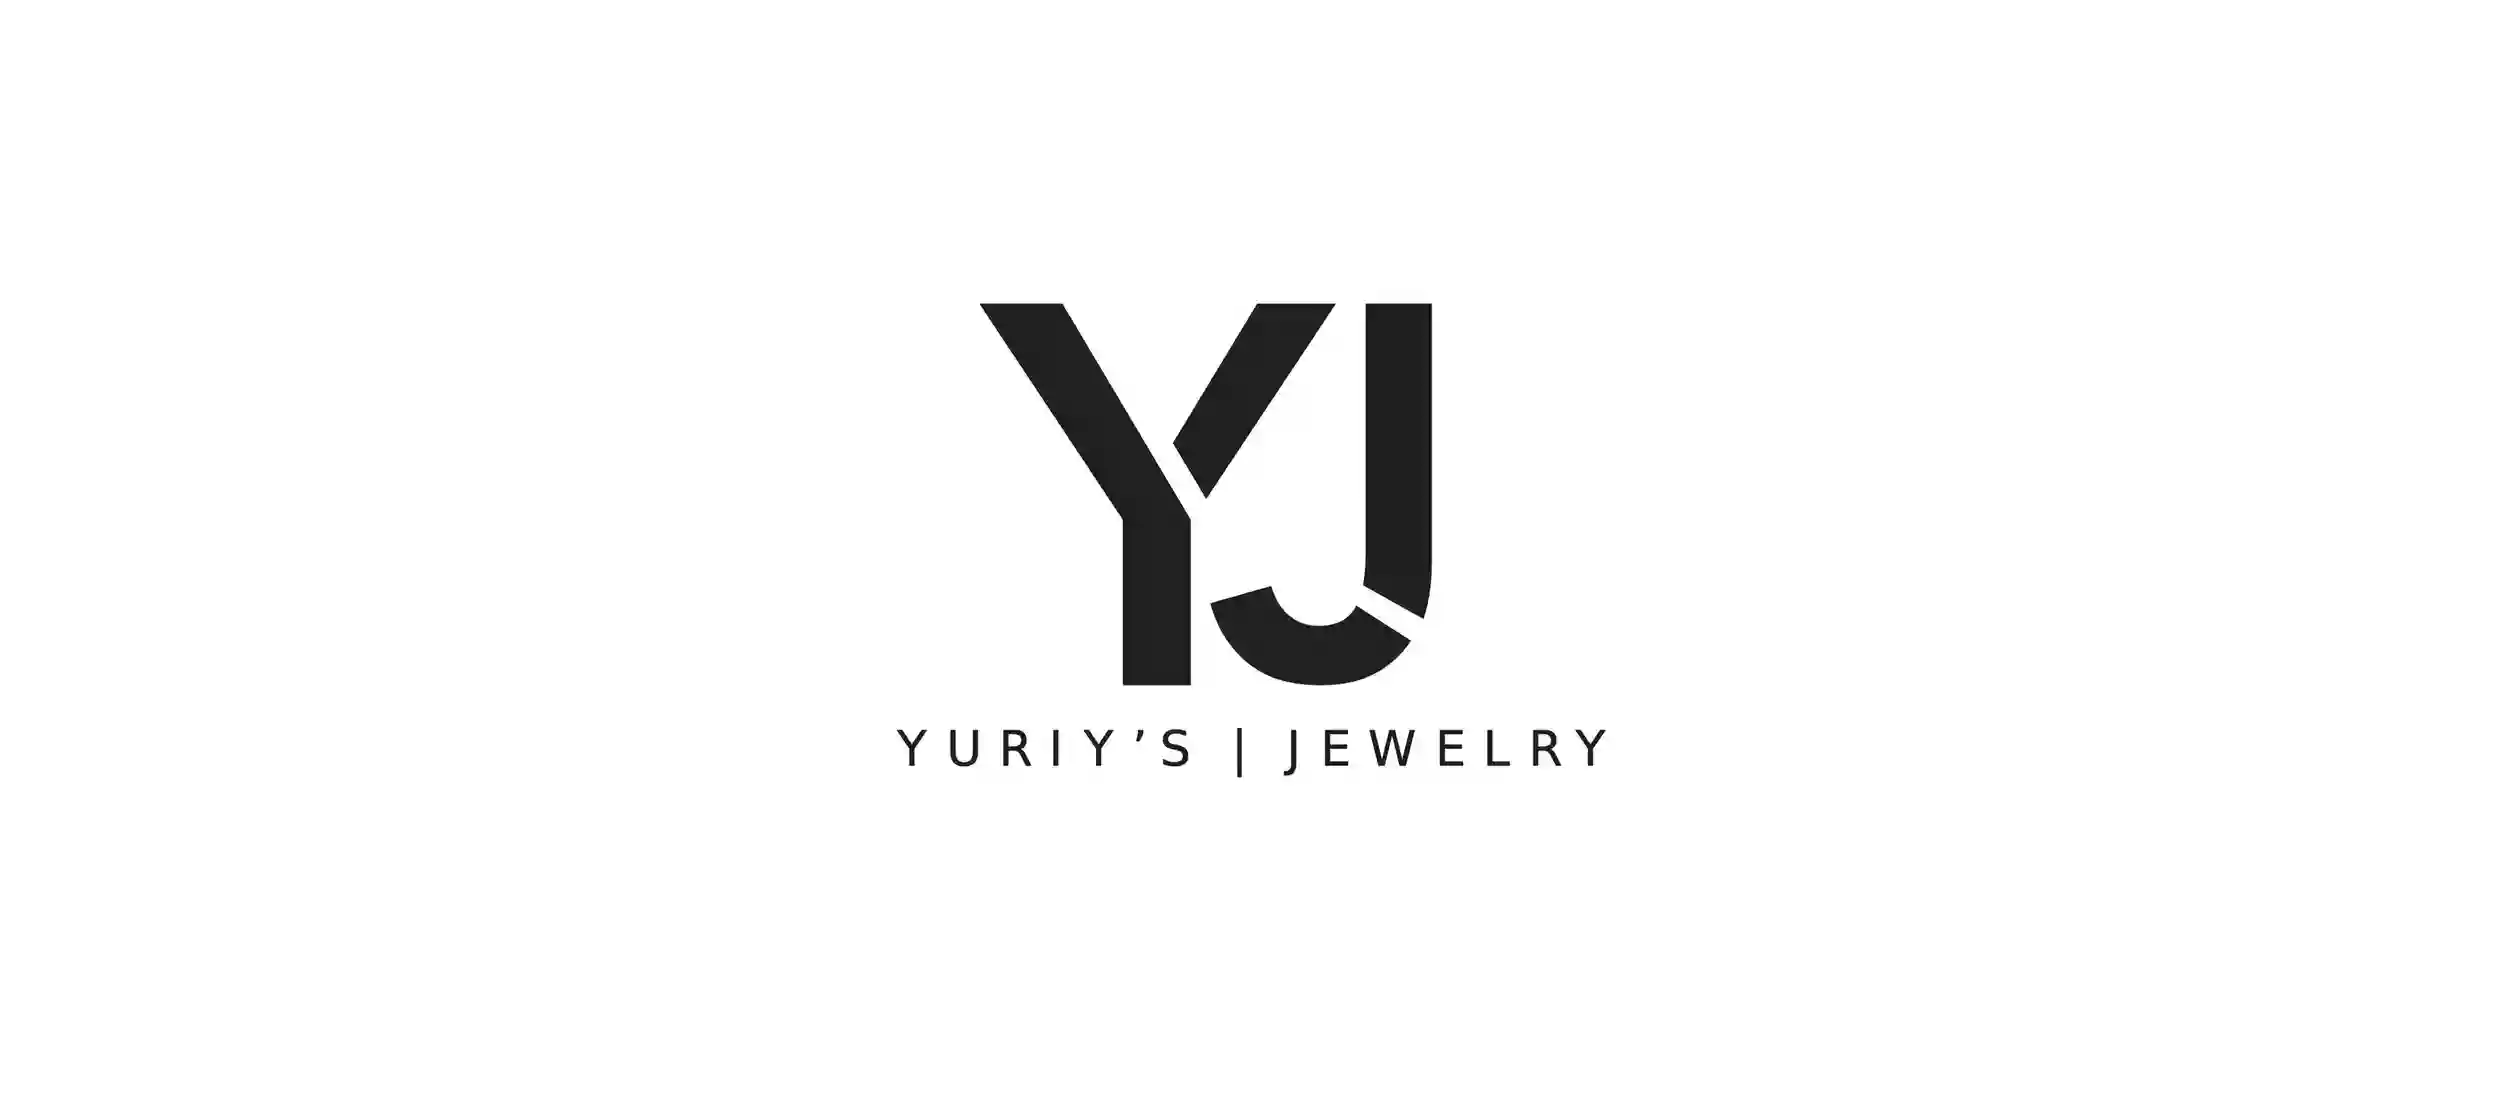 Yuriy's Jewelry